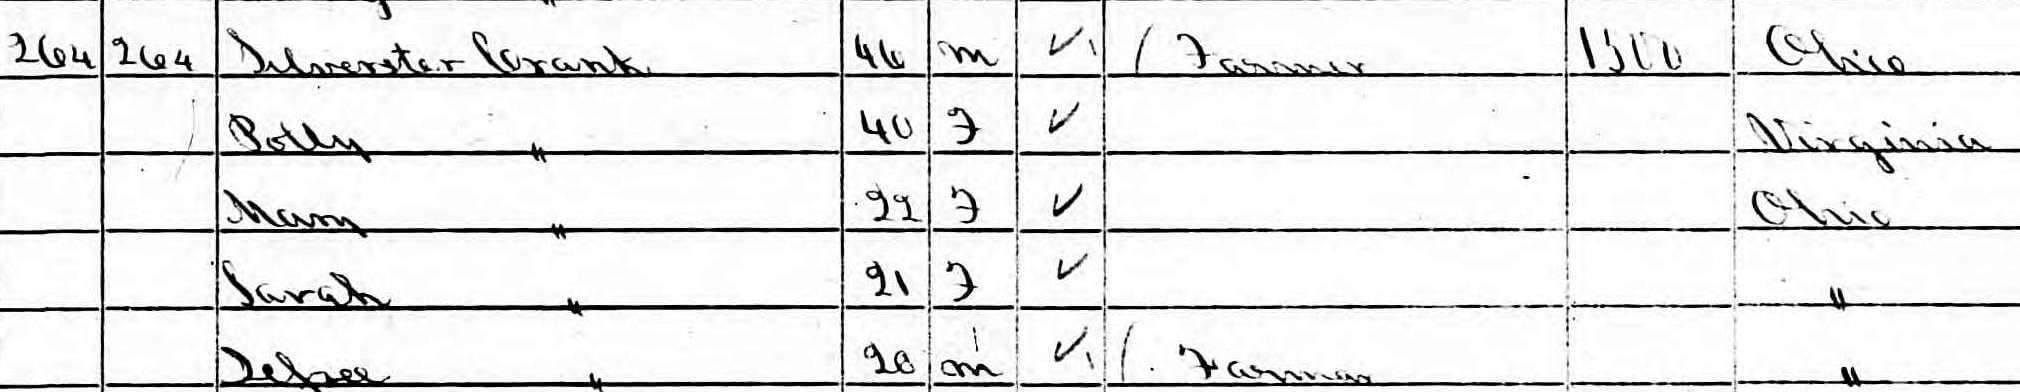 Sylvester Crank Census Image